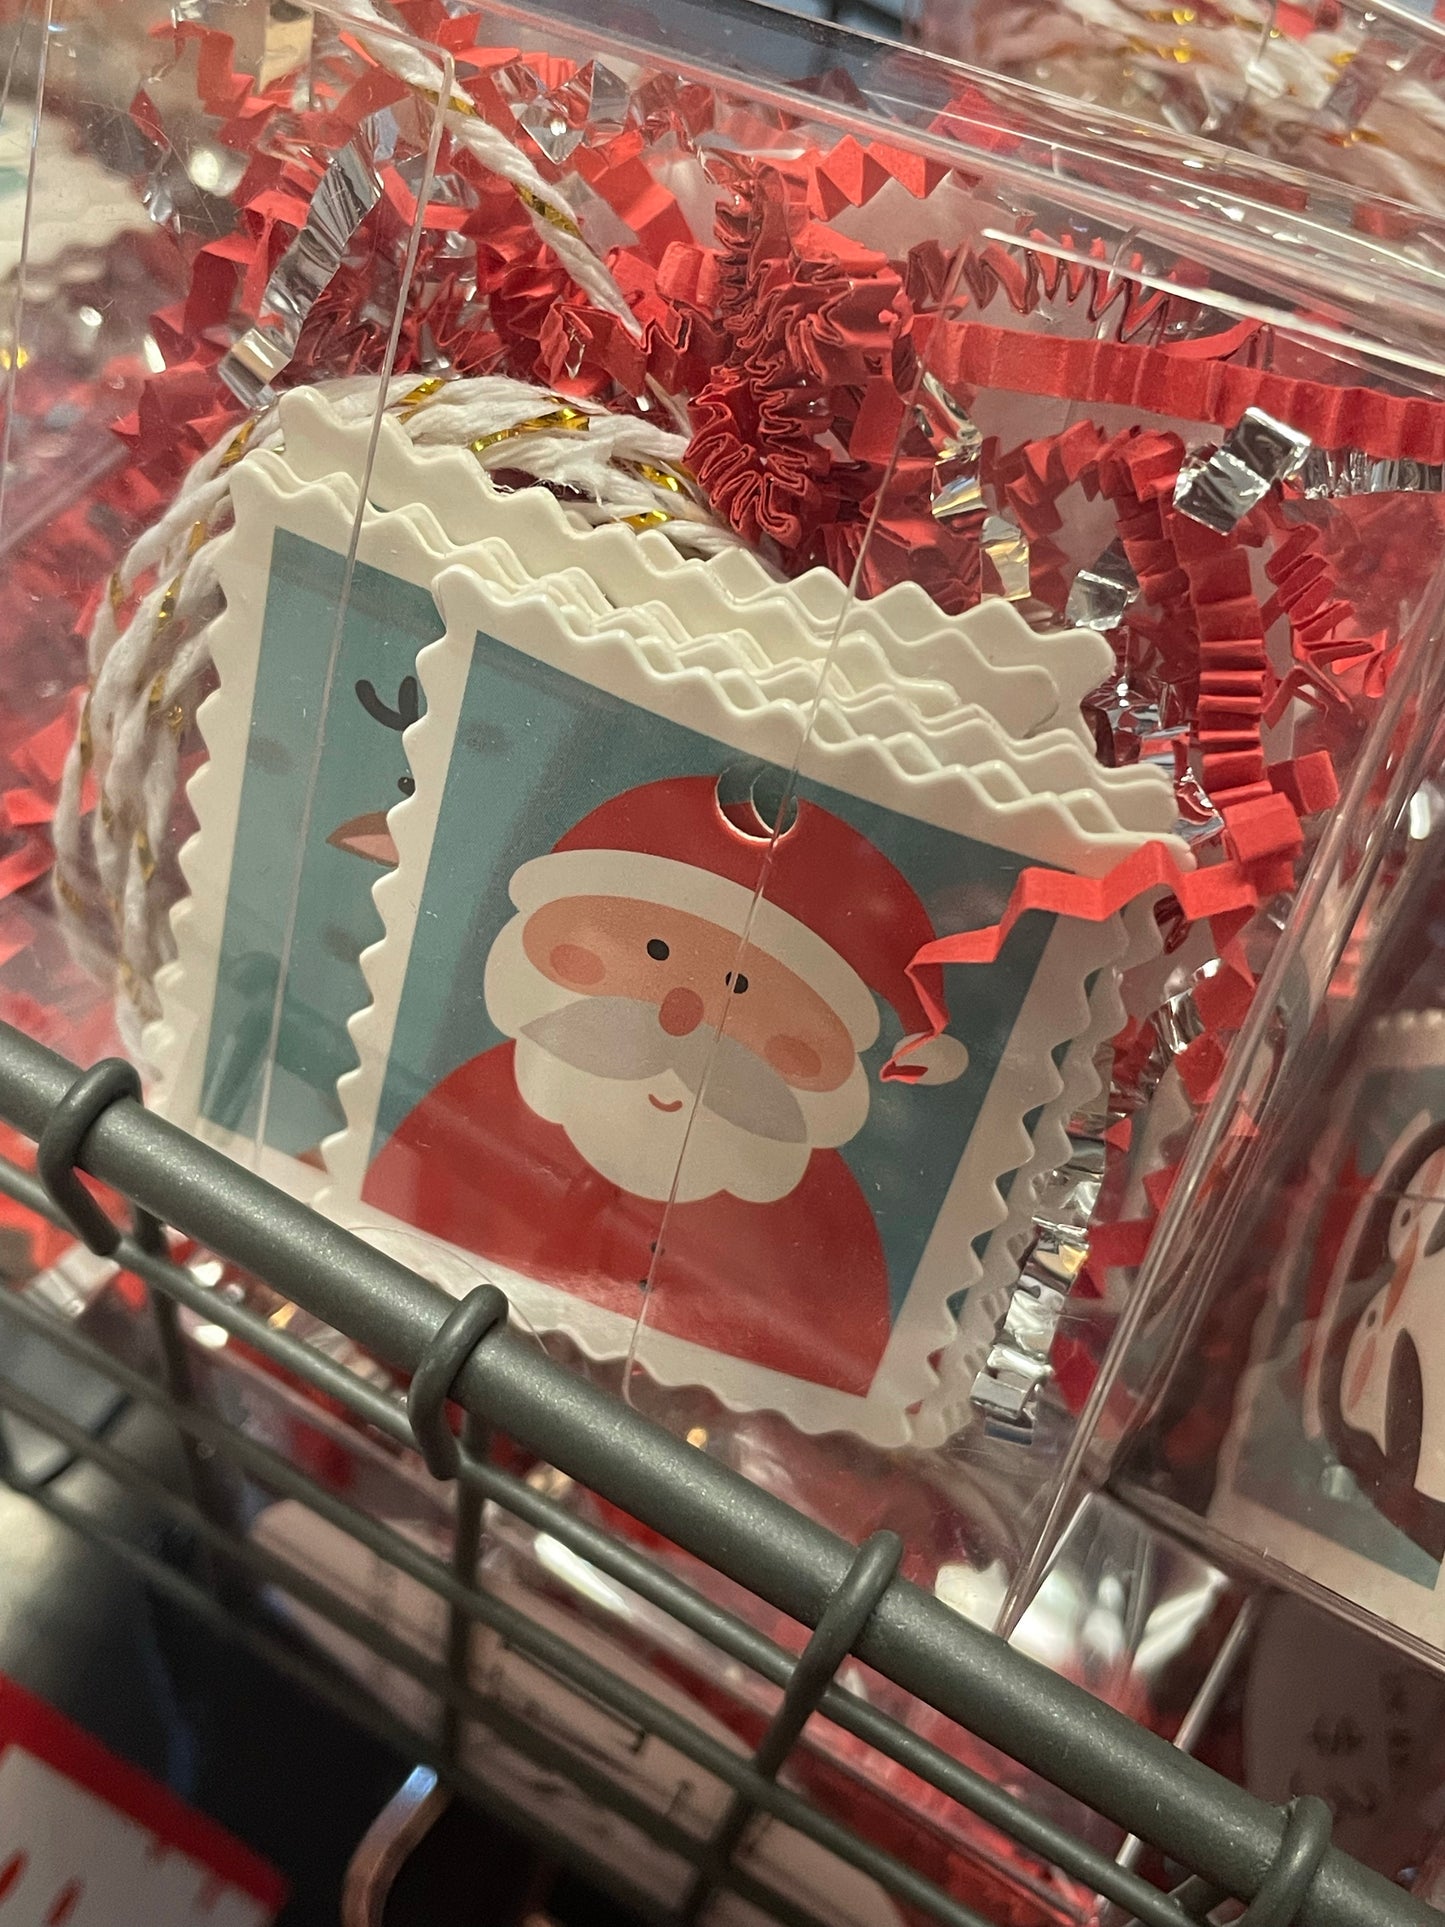 Holiday gift tags